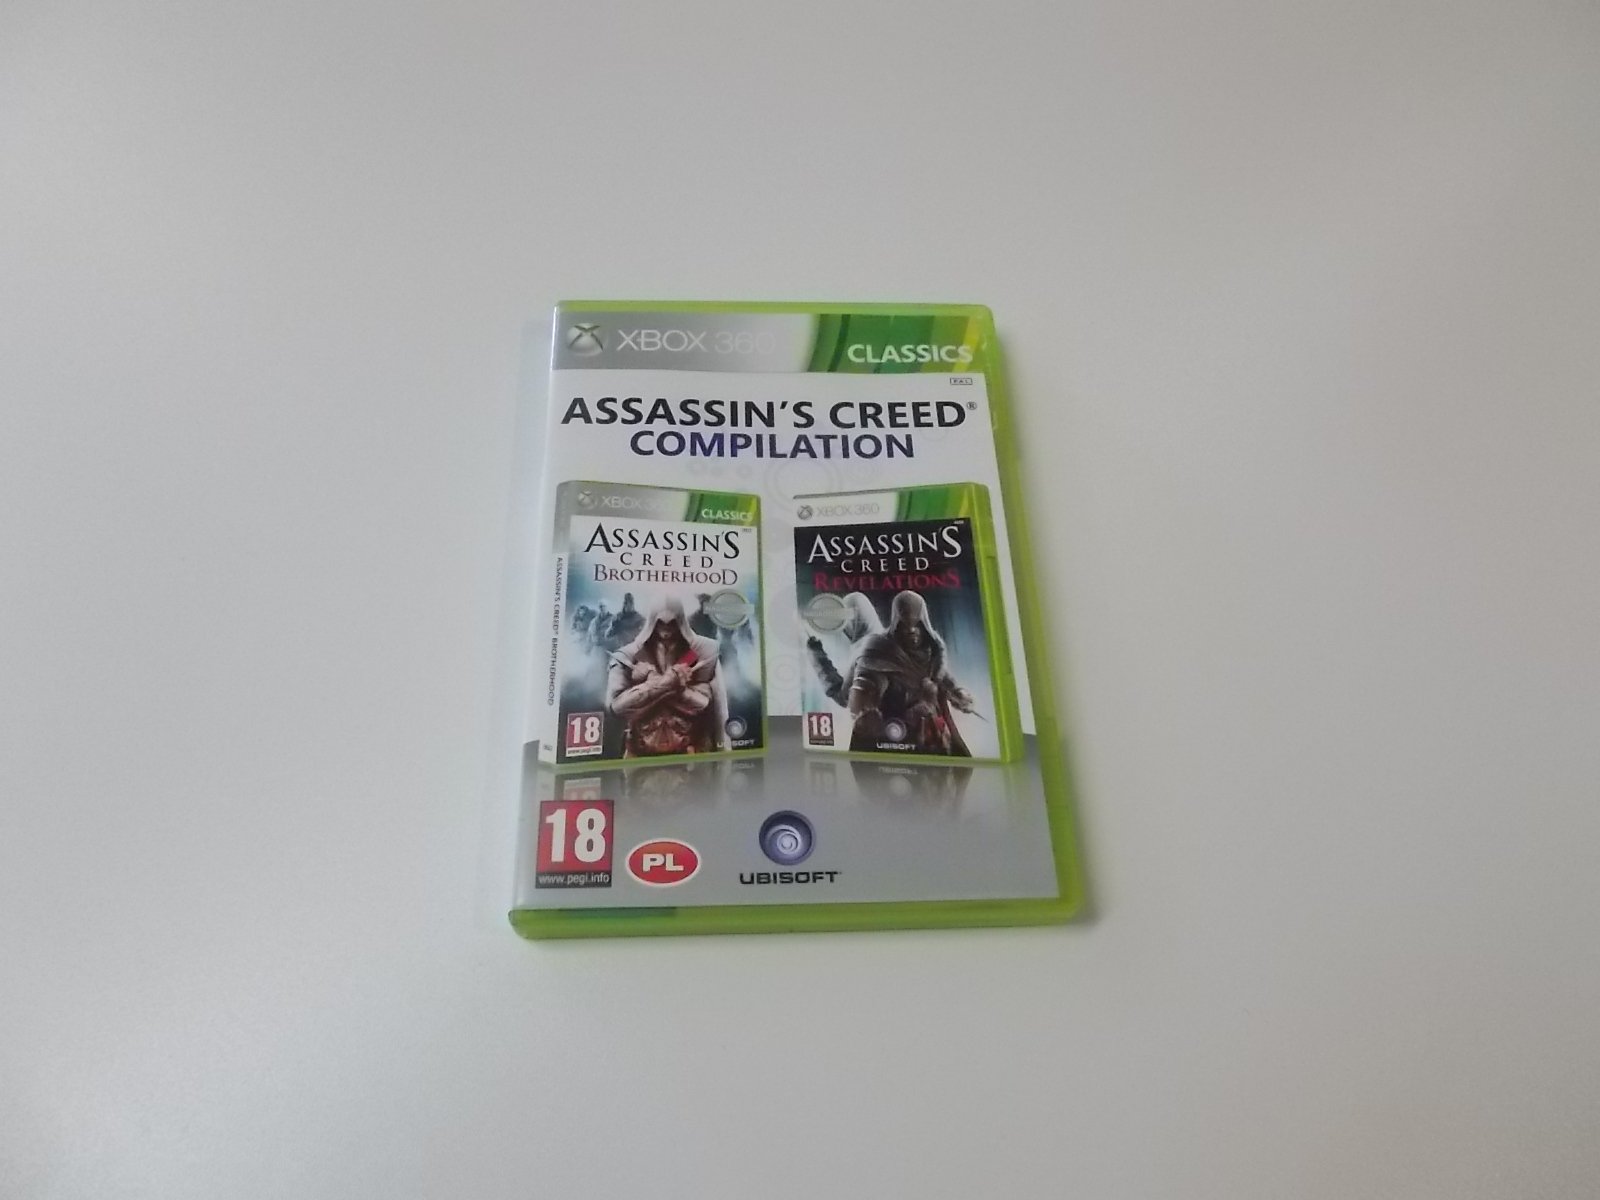 Assassin's Creed Compilation - GRA Xbox 360 - Opole 0438